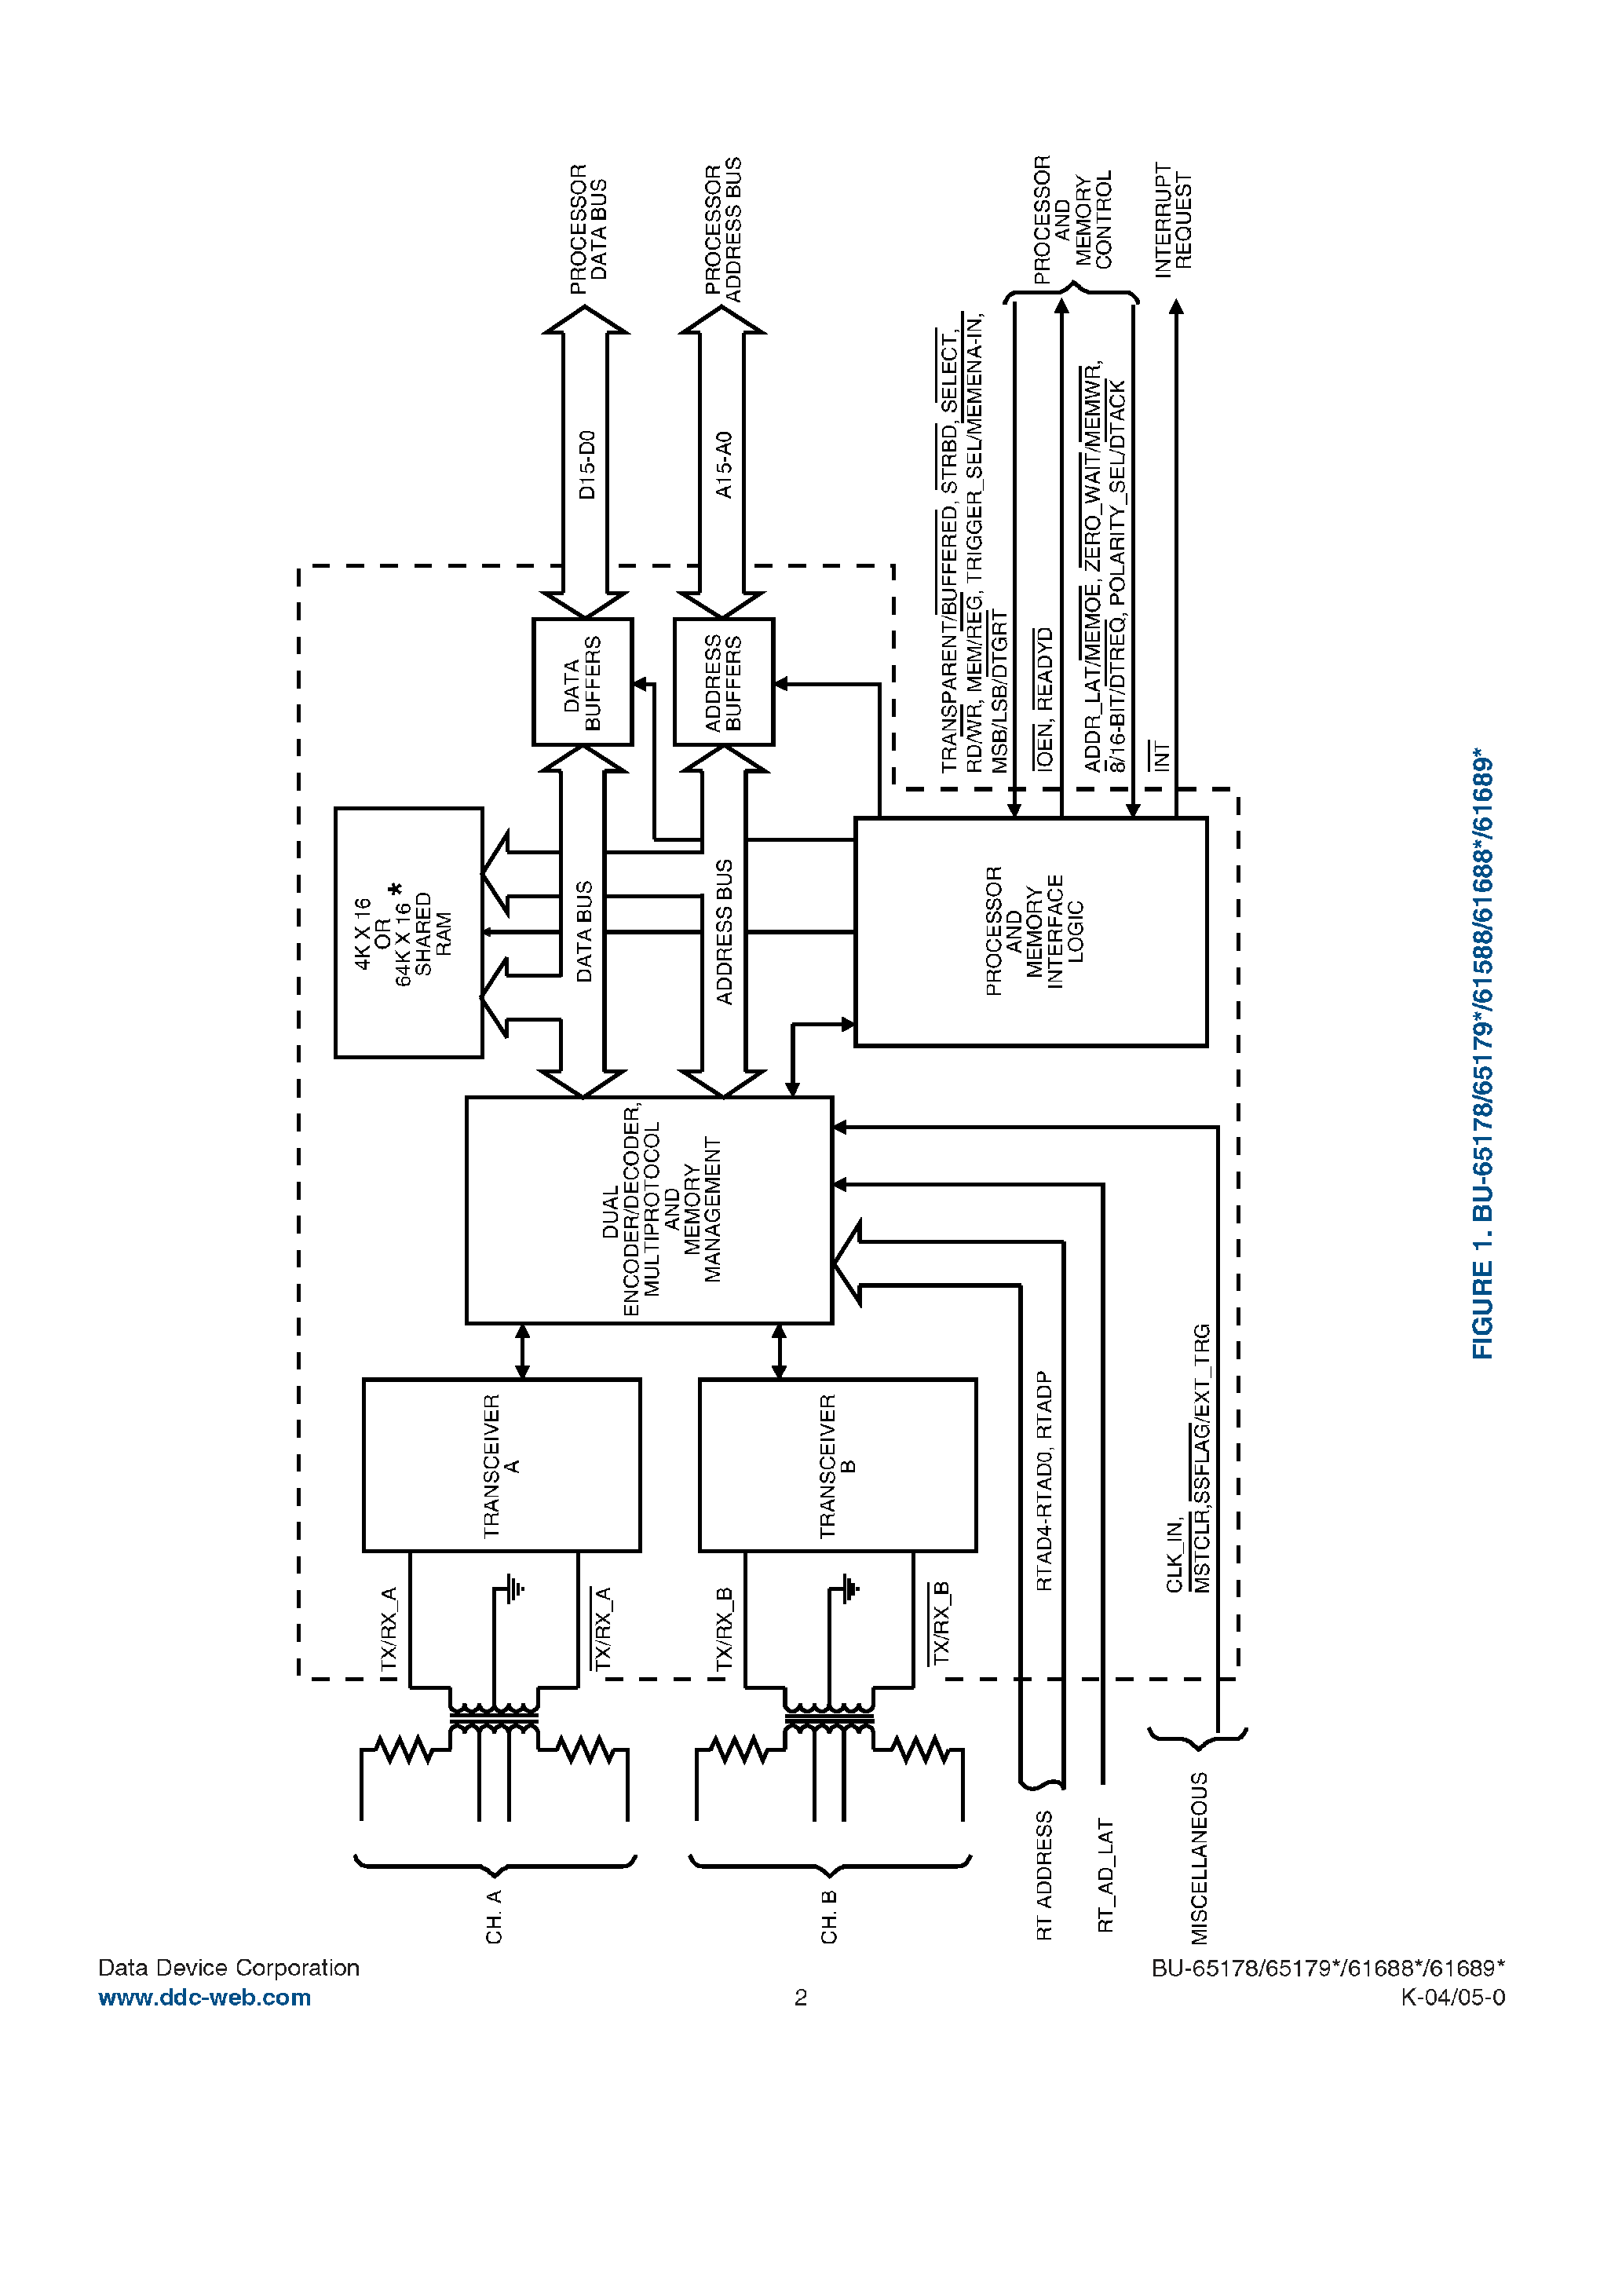 Datasheet BU61688 - Miniature Advanced Communication Engine and Mini-Ace Plus page 2